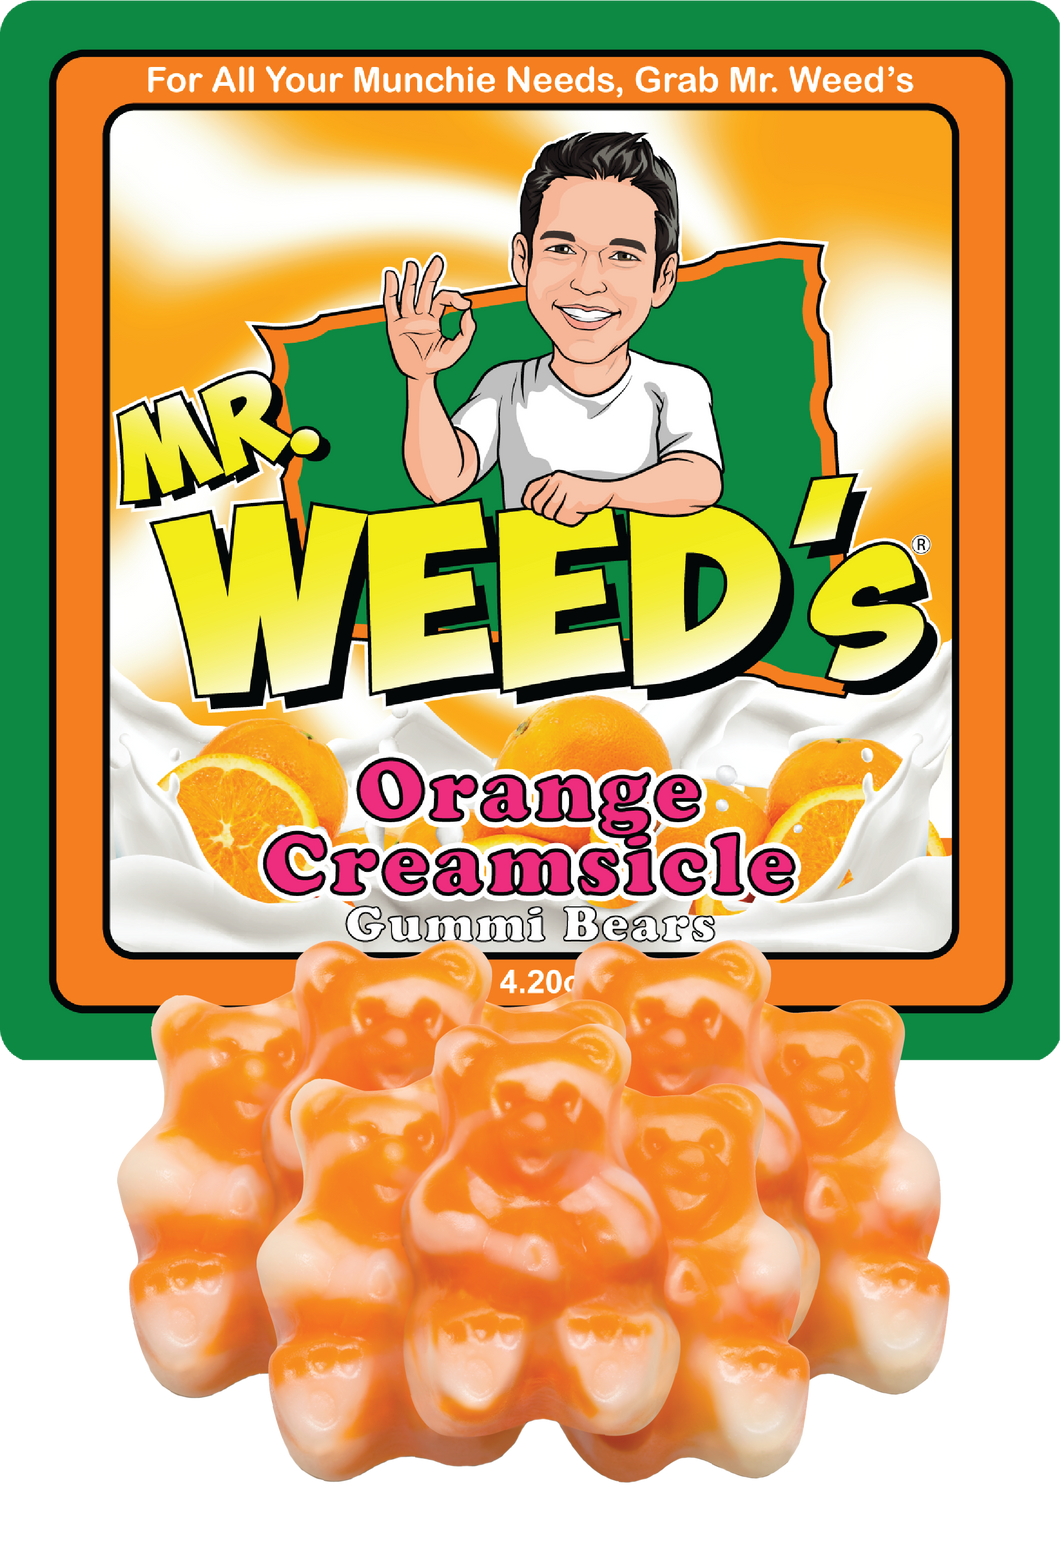 Mr. Weed's Orange Creamsicle Gummi Bears